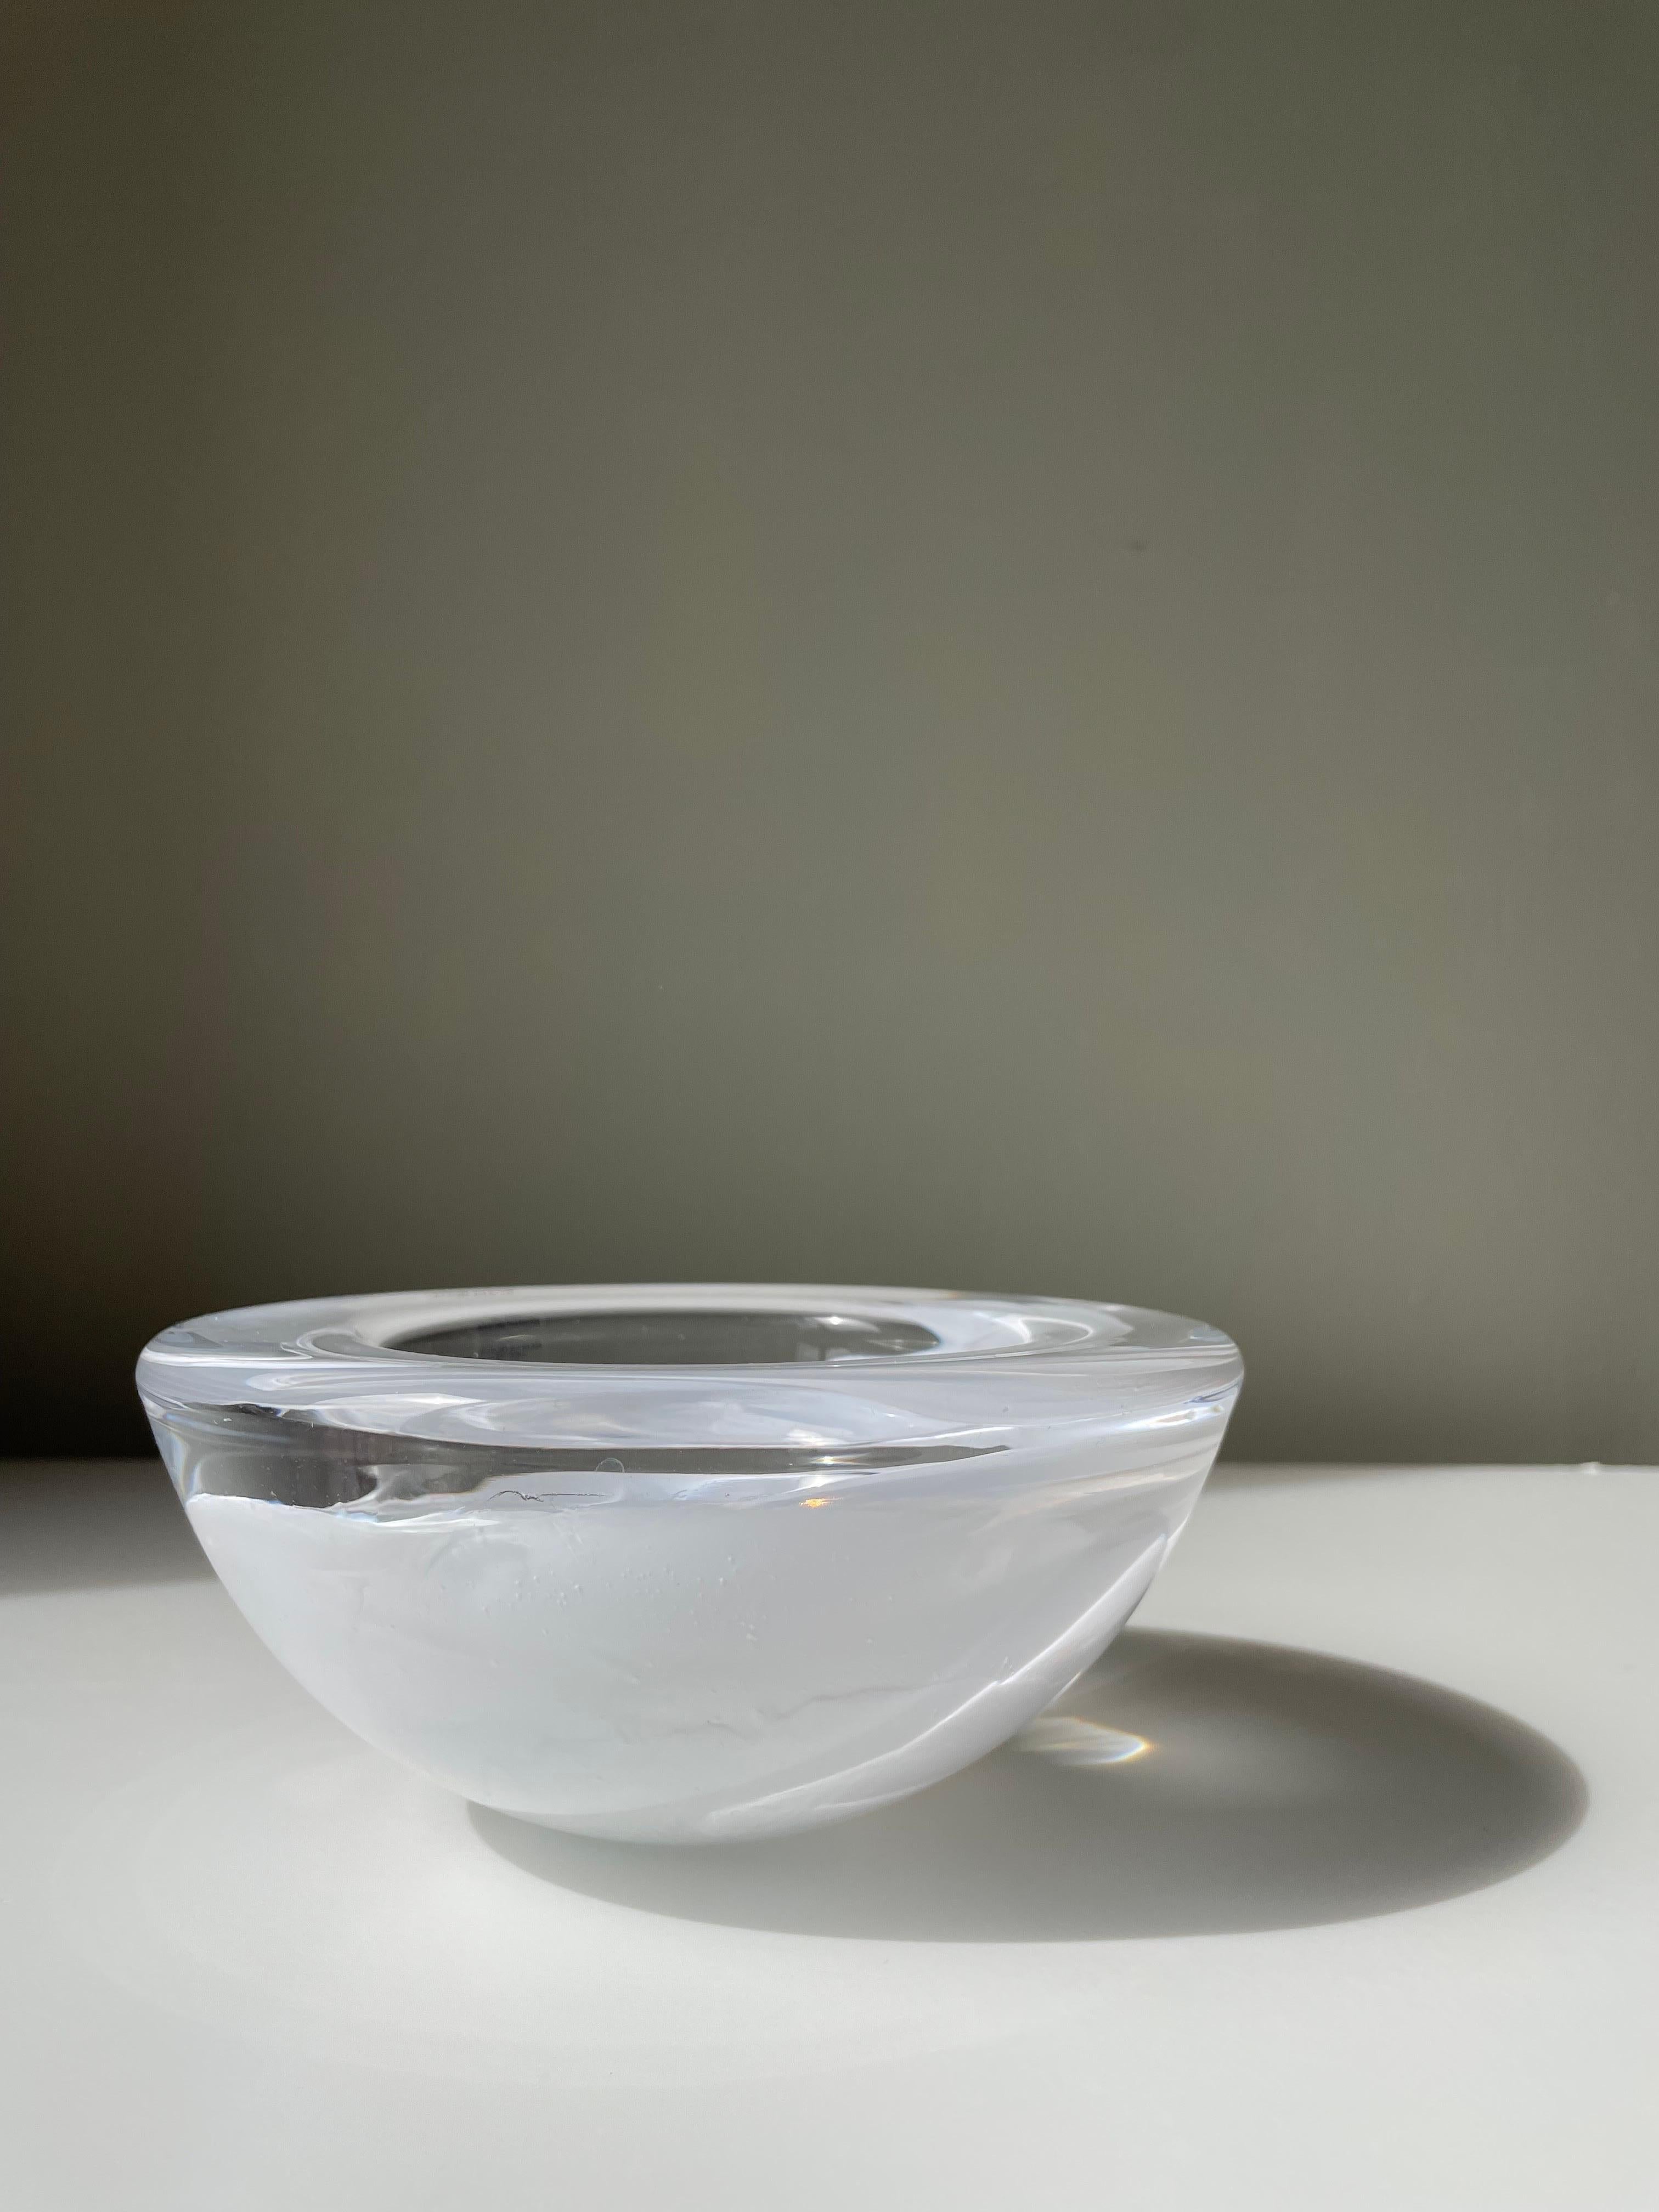 Kosta Boda Swedish Art Glass White Swirl Bowl, 1980s For Sale 11